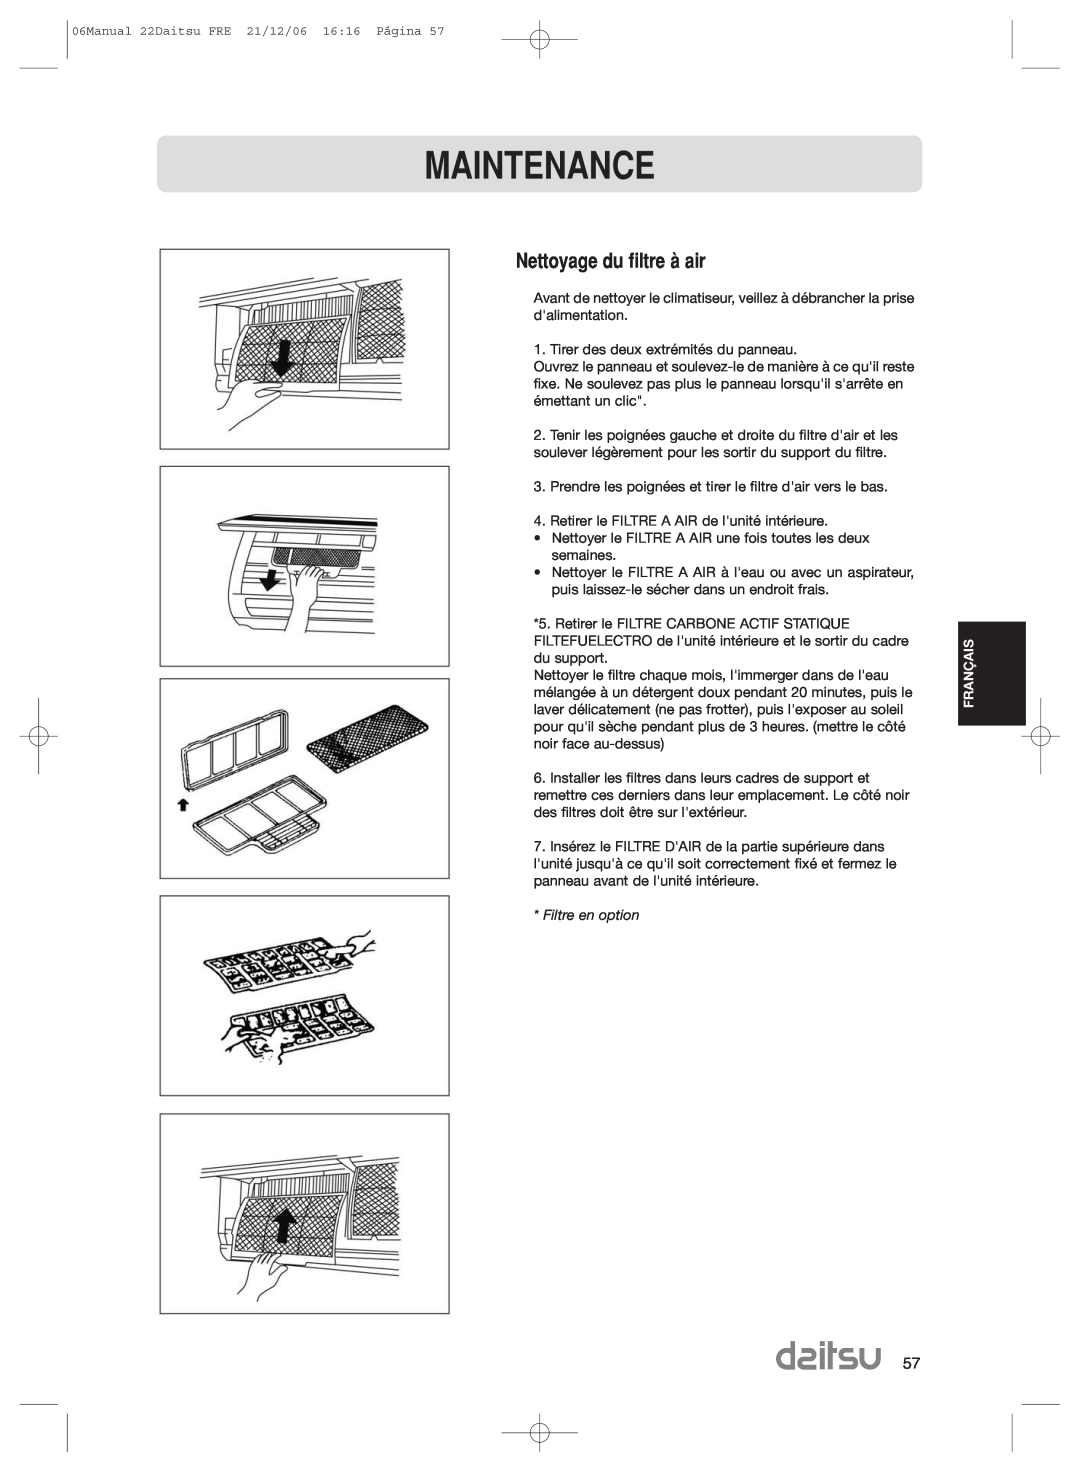 Daitsu ASD 129U11, ASD 9U2 operation manual Nettoyage du filtre ˆ air, Maintenance, Filtre en option 